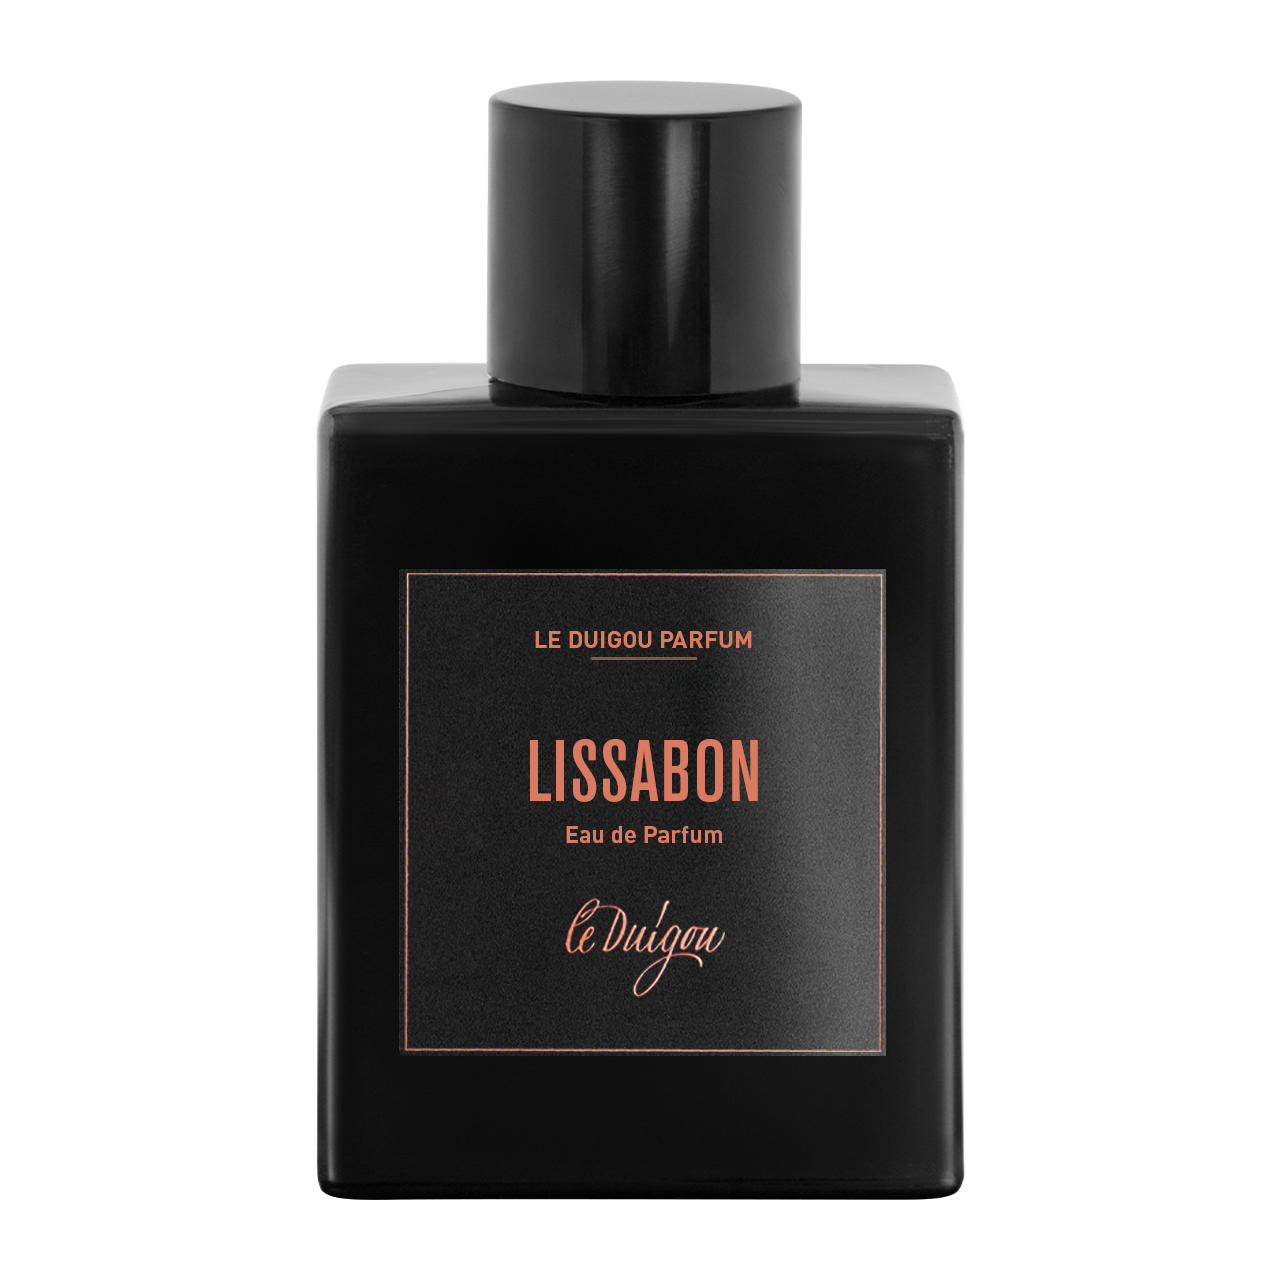 Perfume LISBON EdP 75ml